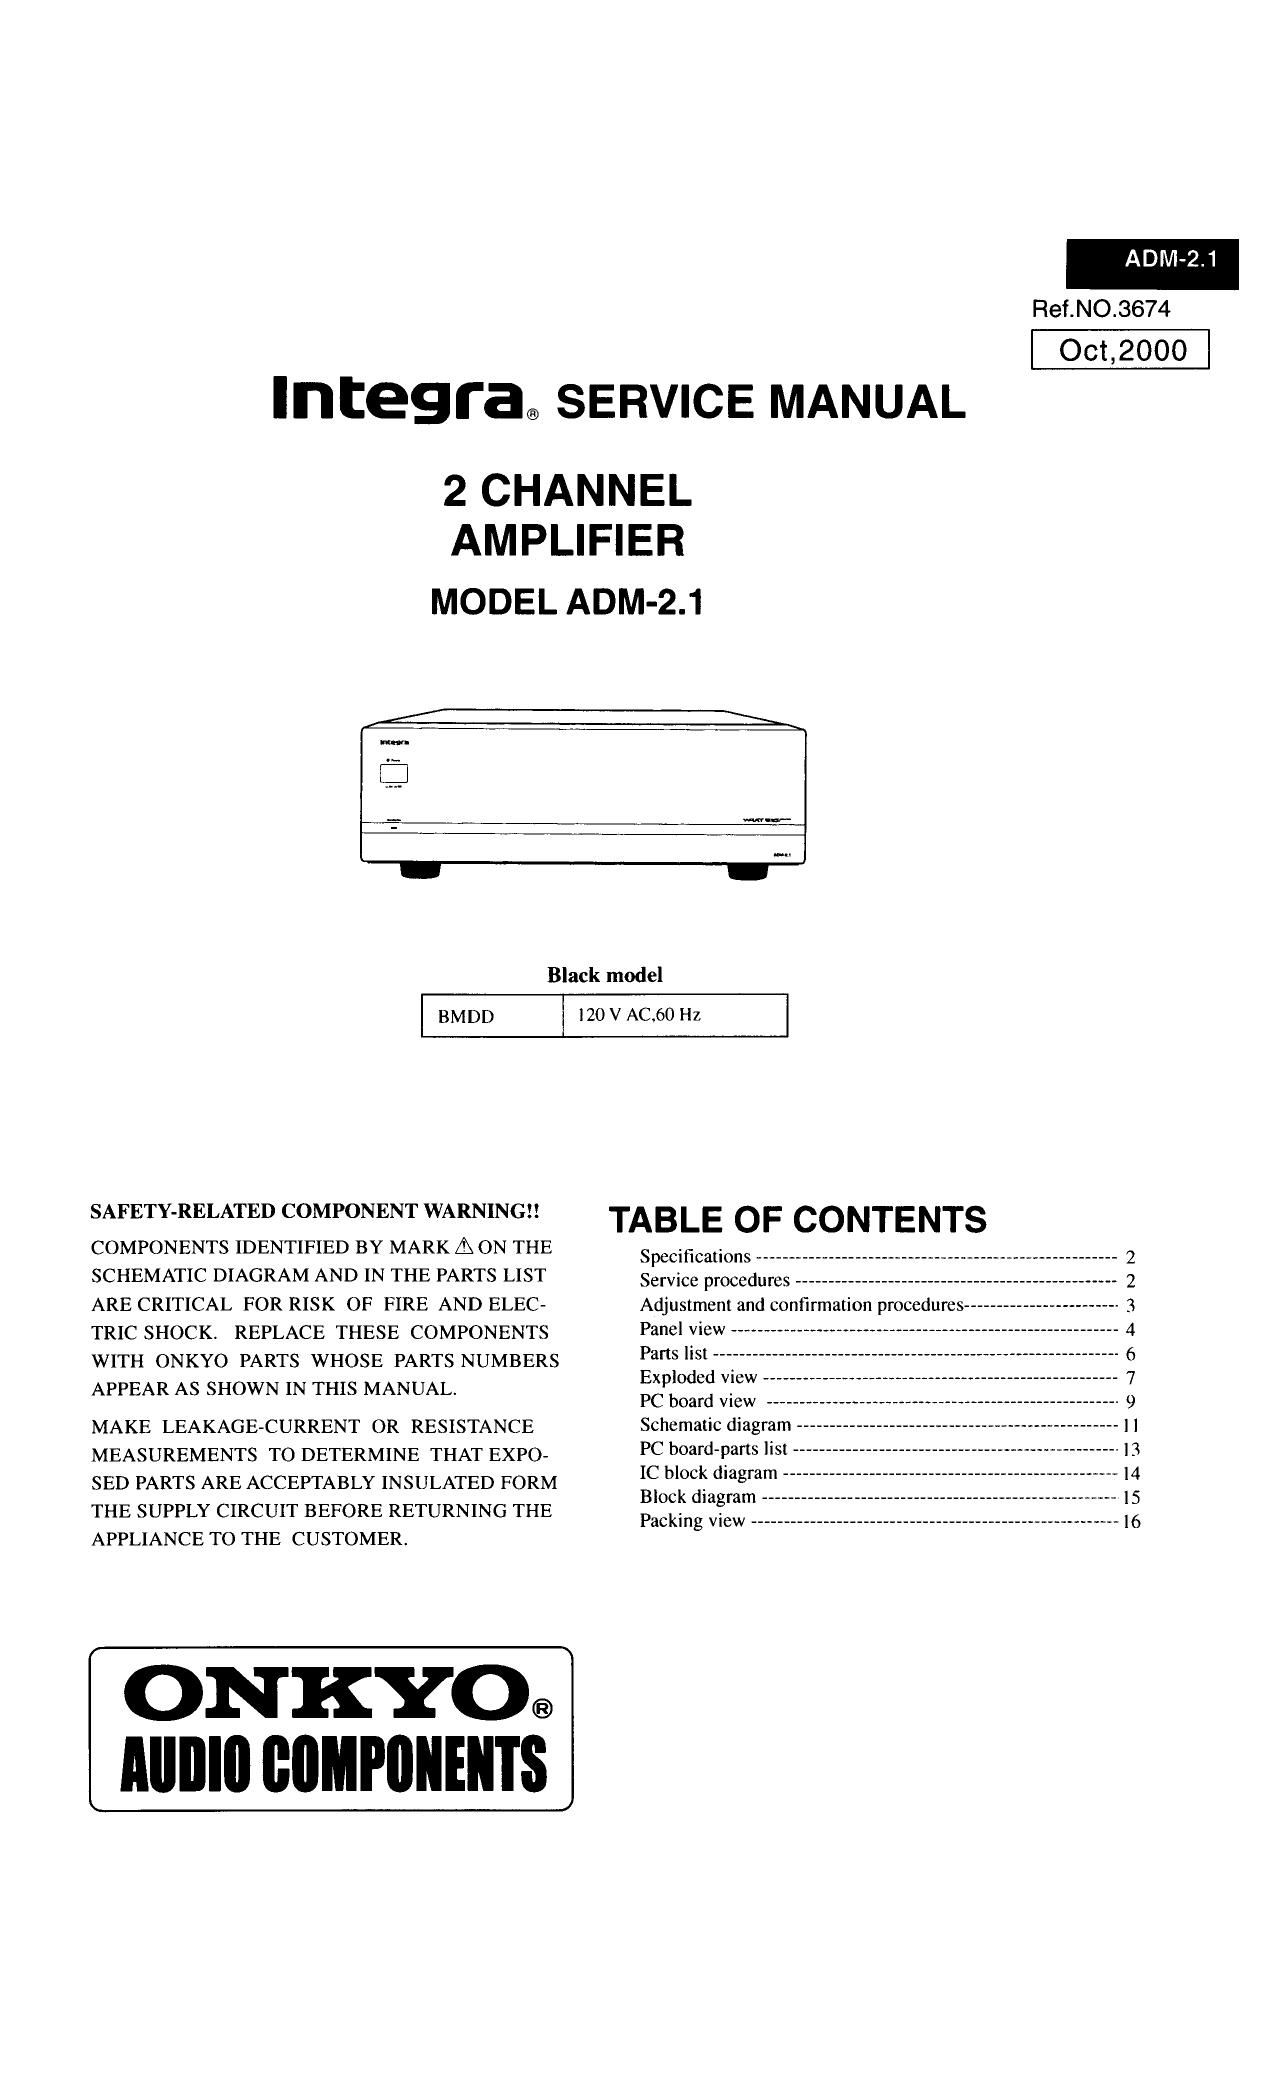 Onkyo ADM 2.1 Service Manual